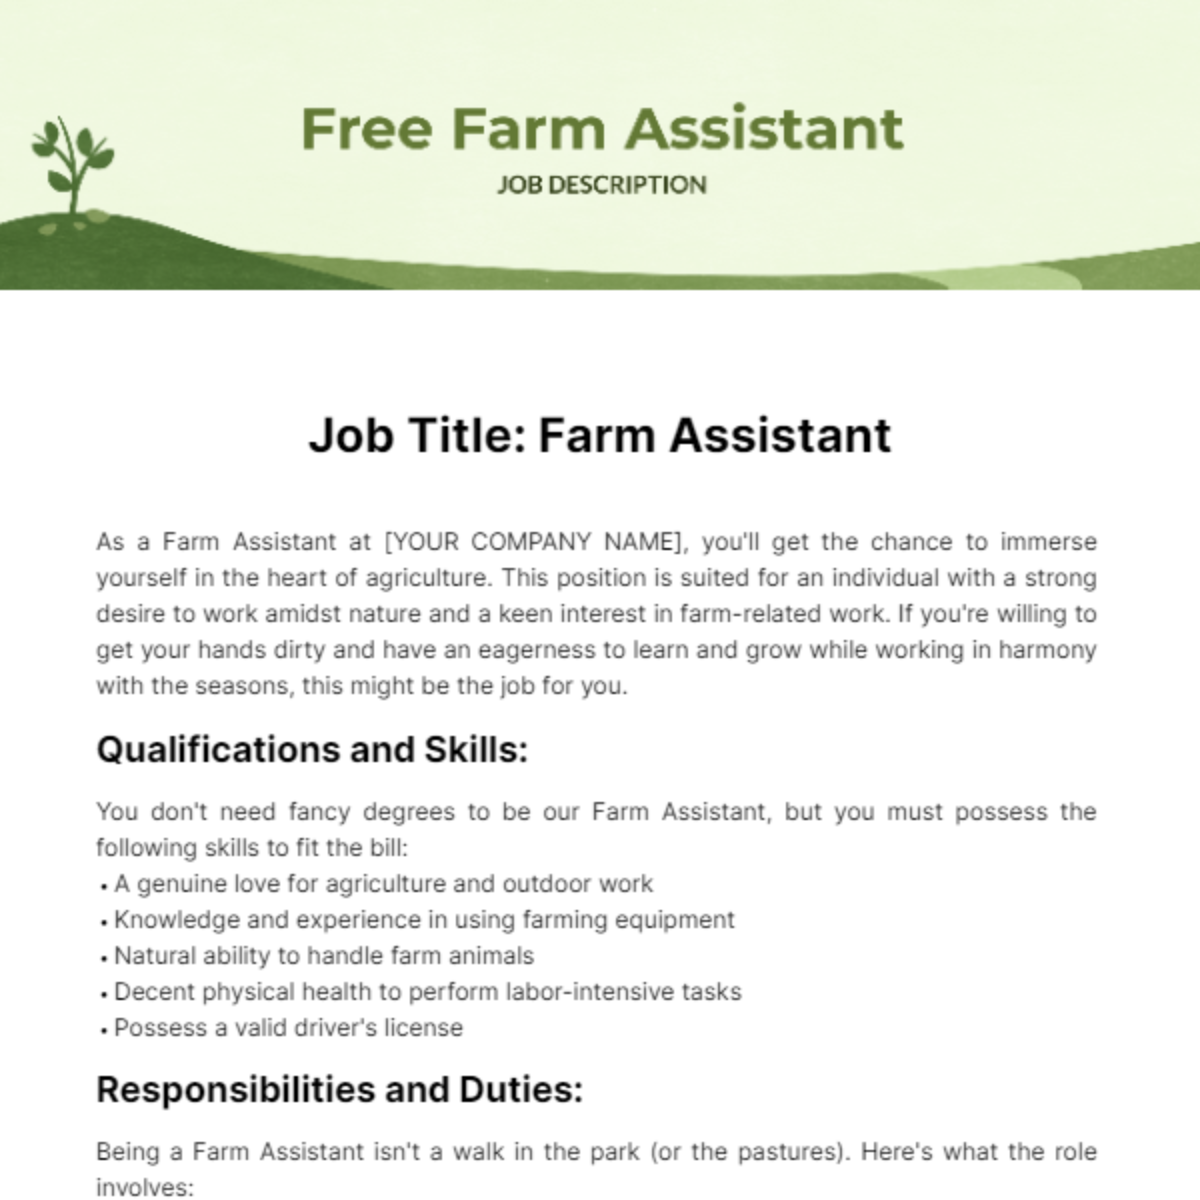 Free Farm Assistant Job Description Template